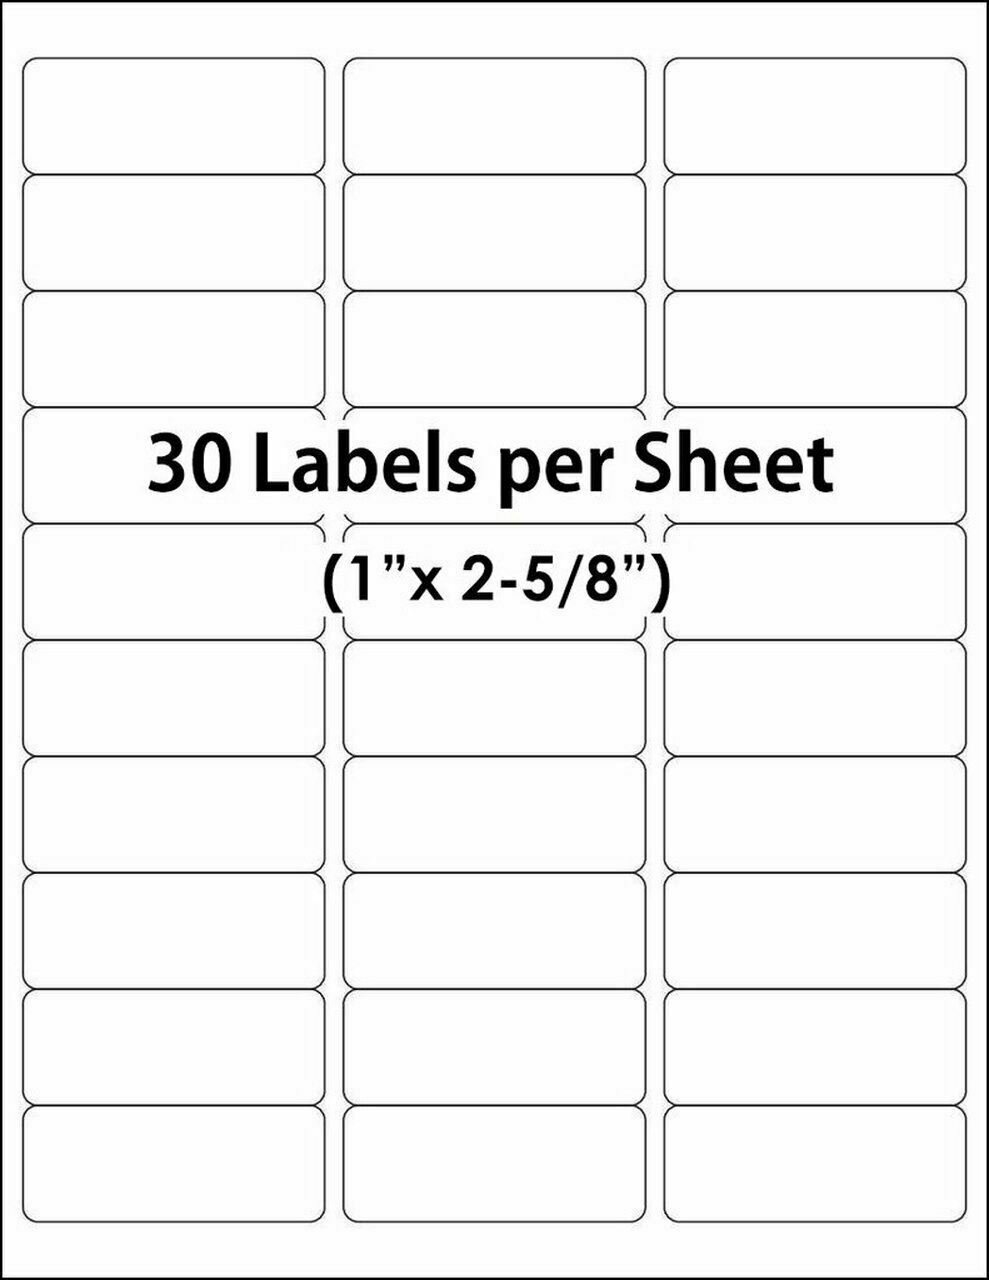 address-labels-sheets-amazon-fba-labels-30-per-sheet-30up-1-x-2-5-8-1000-3000